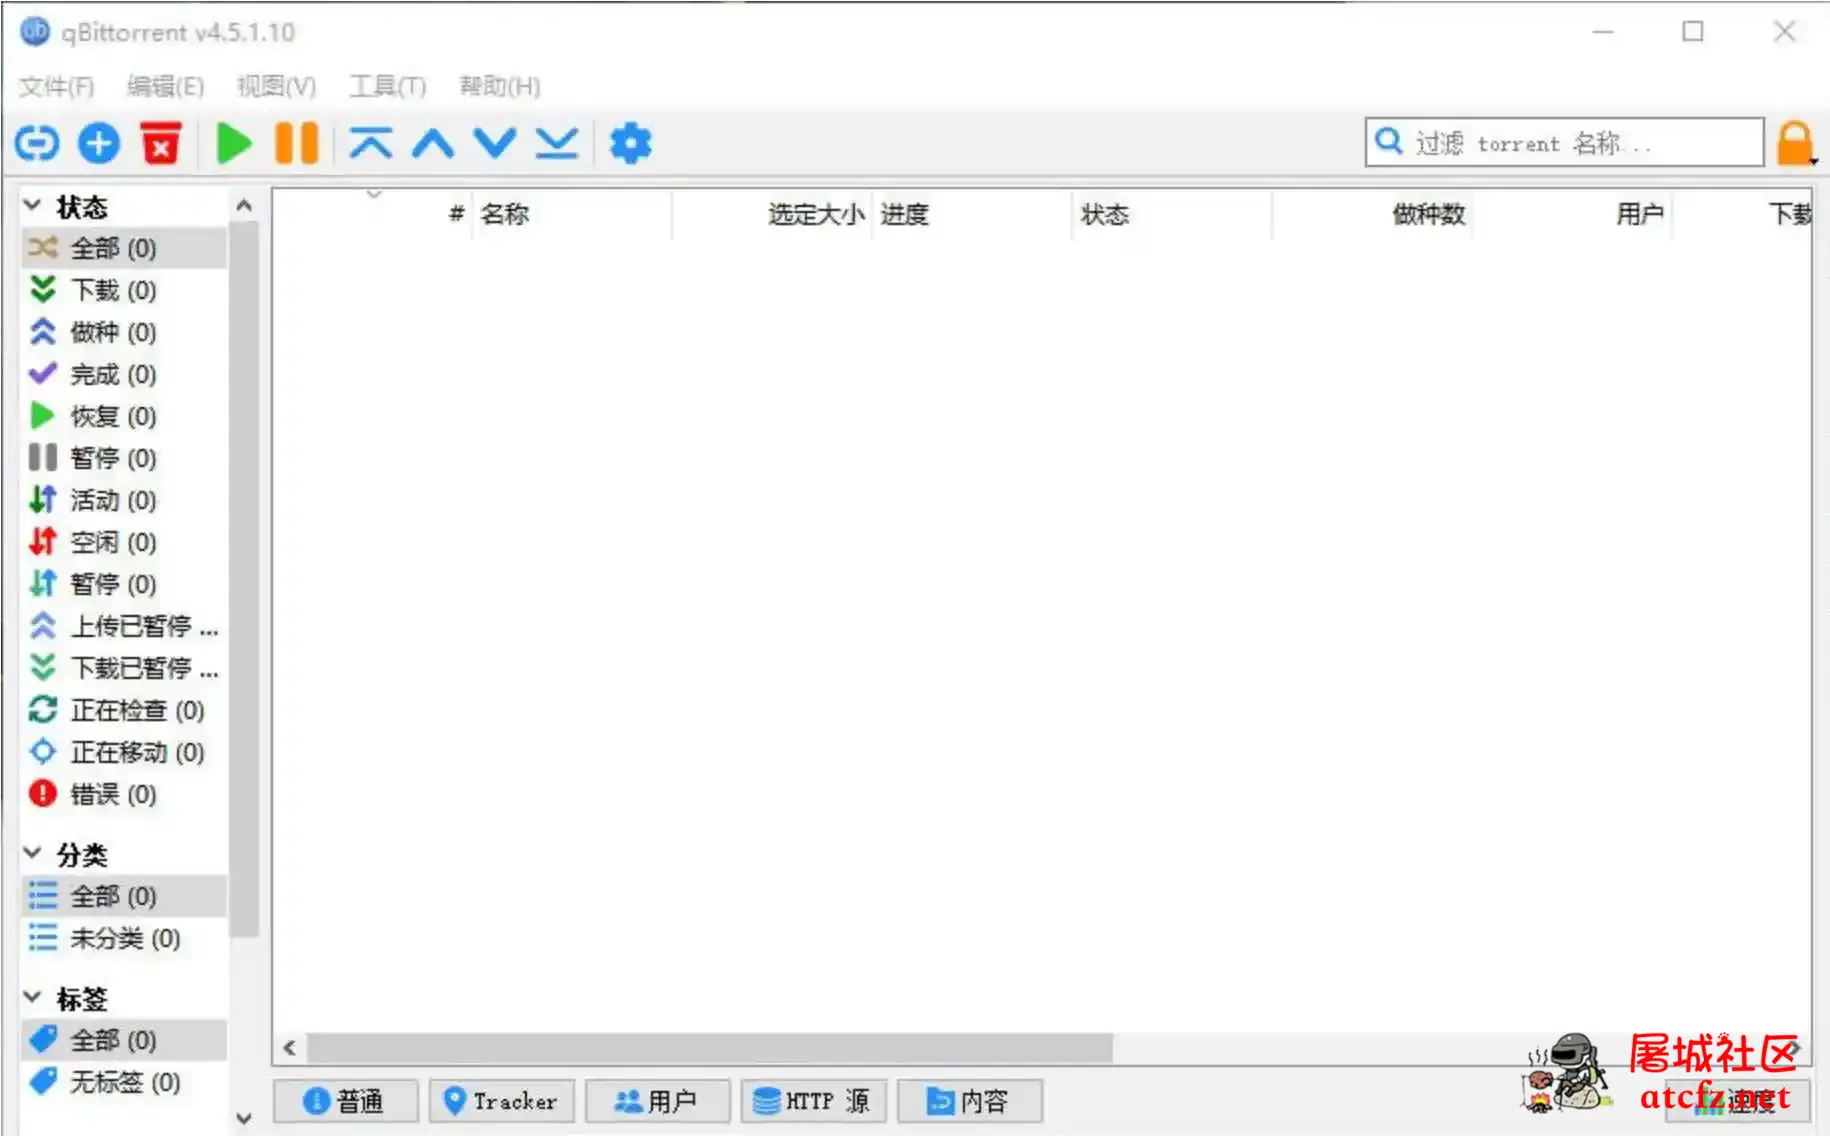 qBittorrent v4.5.3.10增强便携版BT种子下载工具 屠城辅助网www.tcfz1.com4855